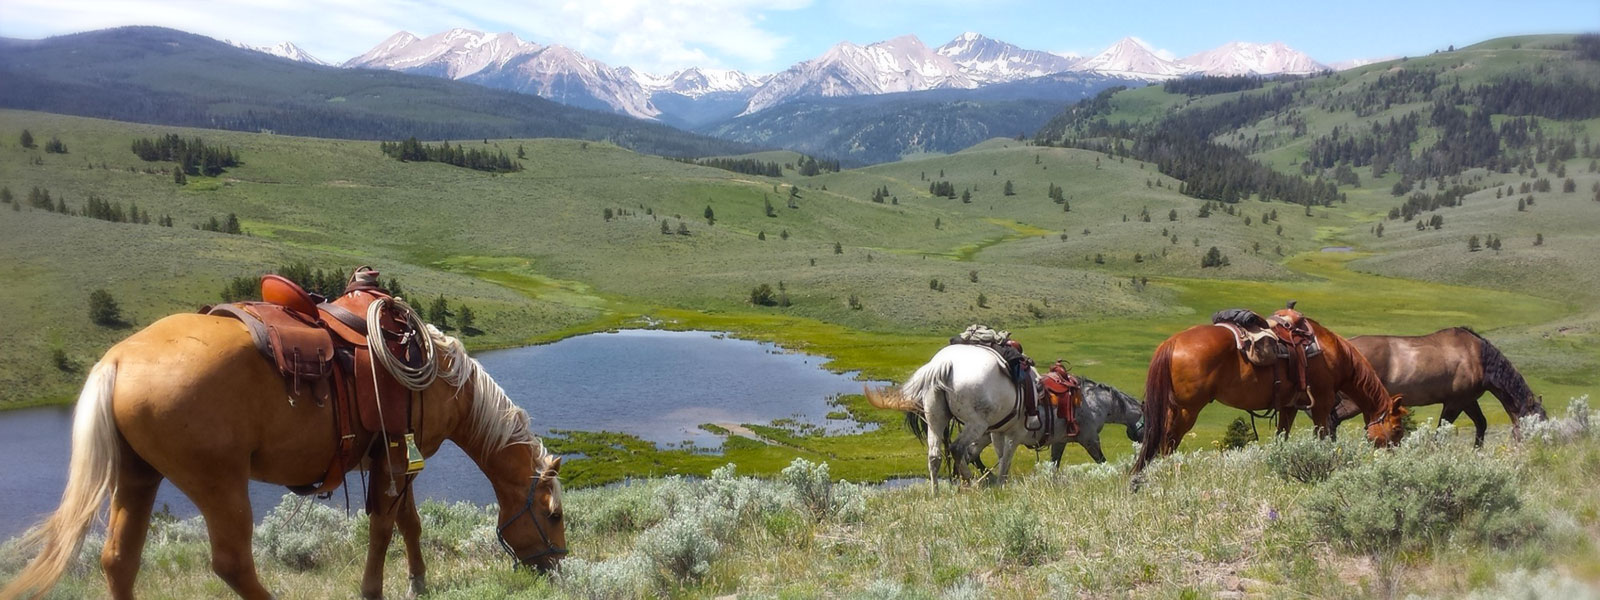 Horses in Montana Backcountry